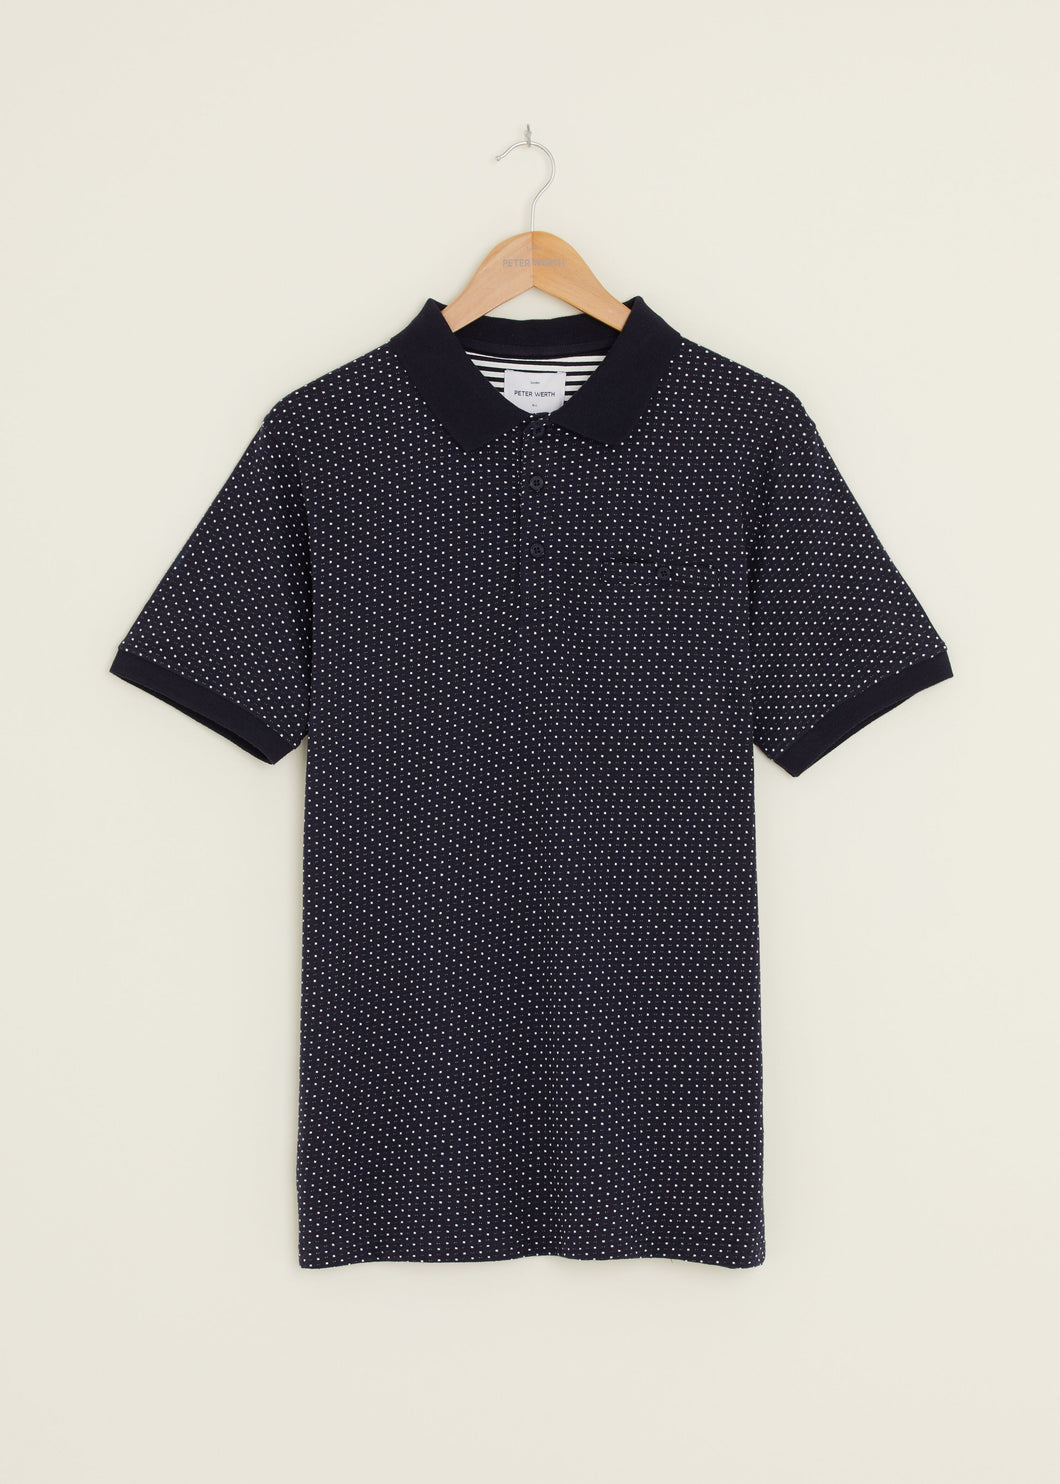 Halliford Polo Shirt - Navy